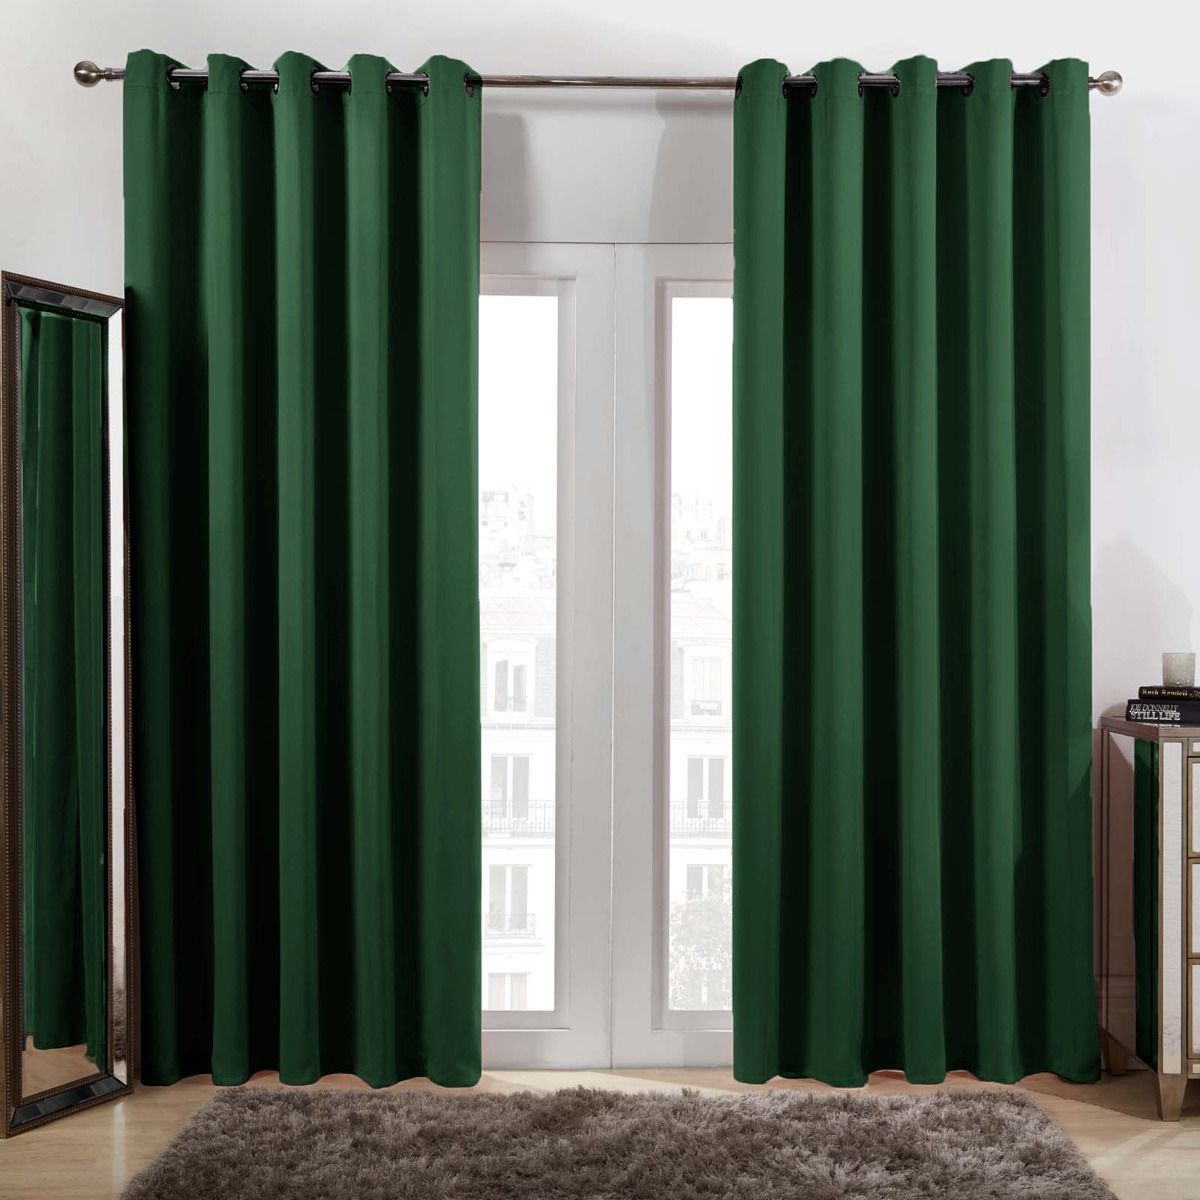 Dreamscene Eyelet Blackout Curtains - Forest Green